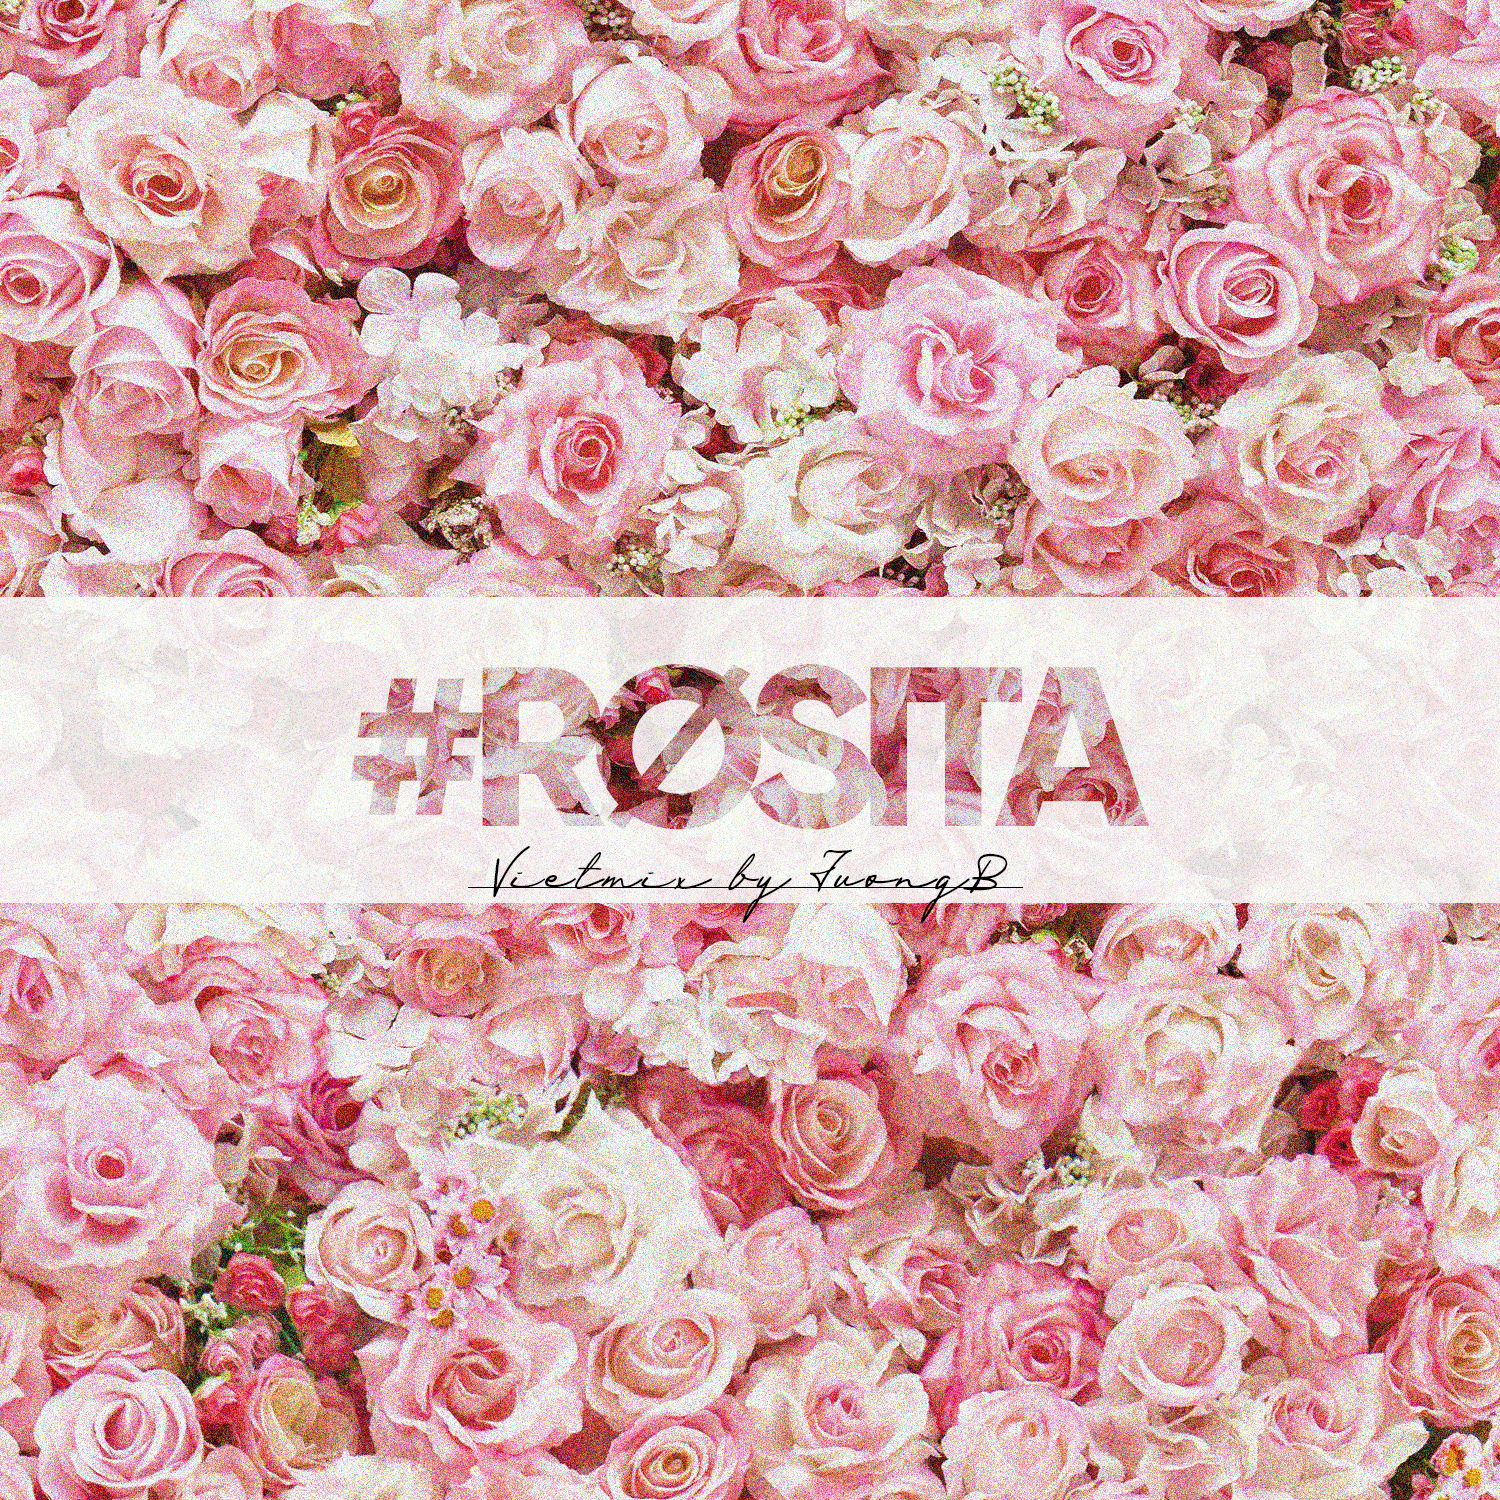 下载 #Rosita - Vietmix By JuongB